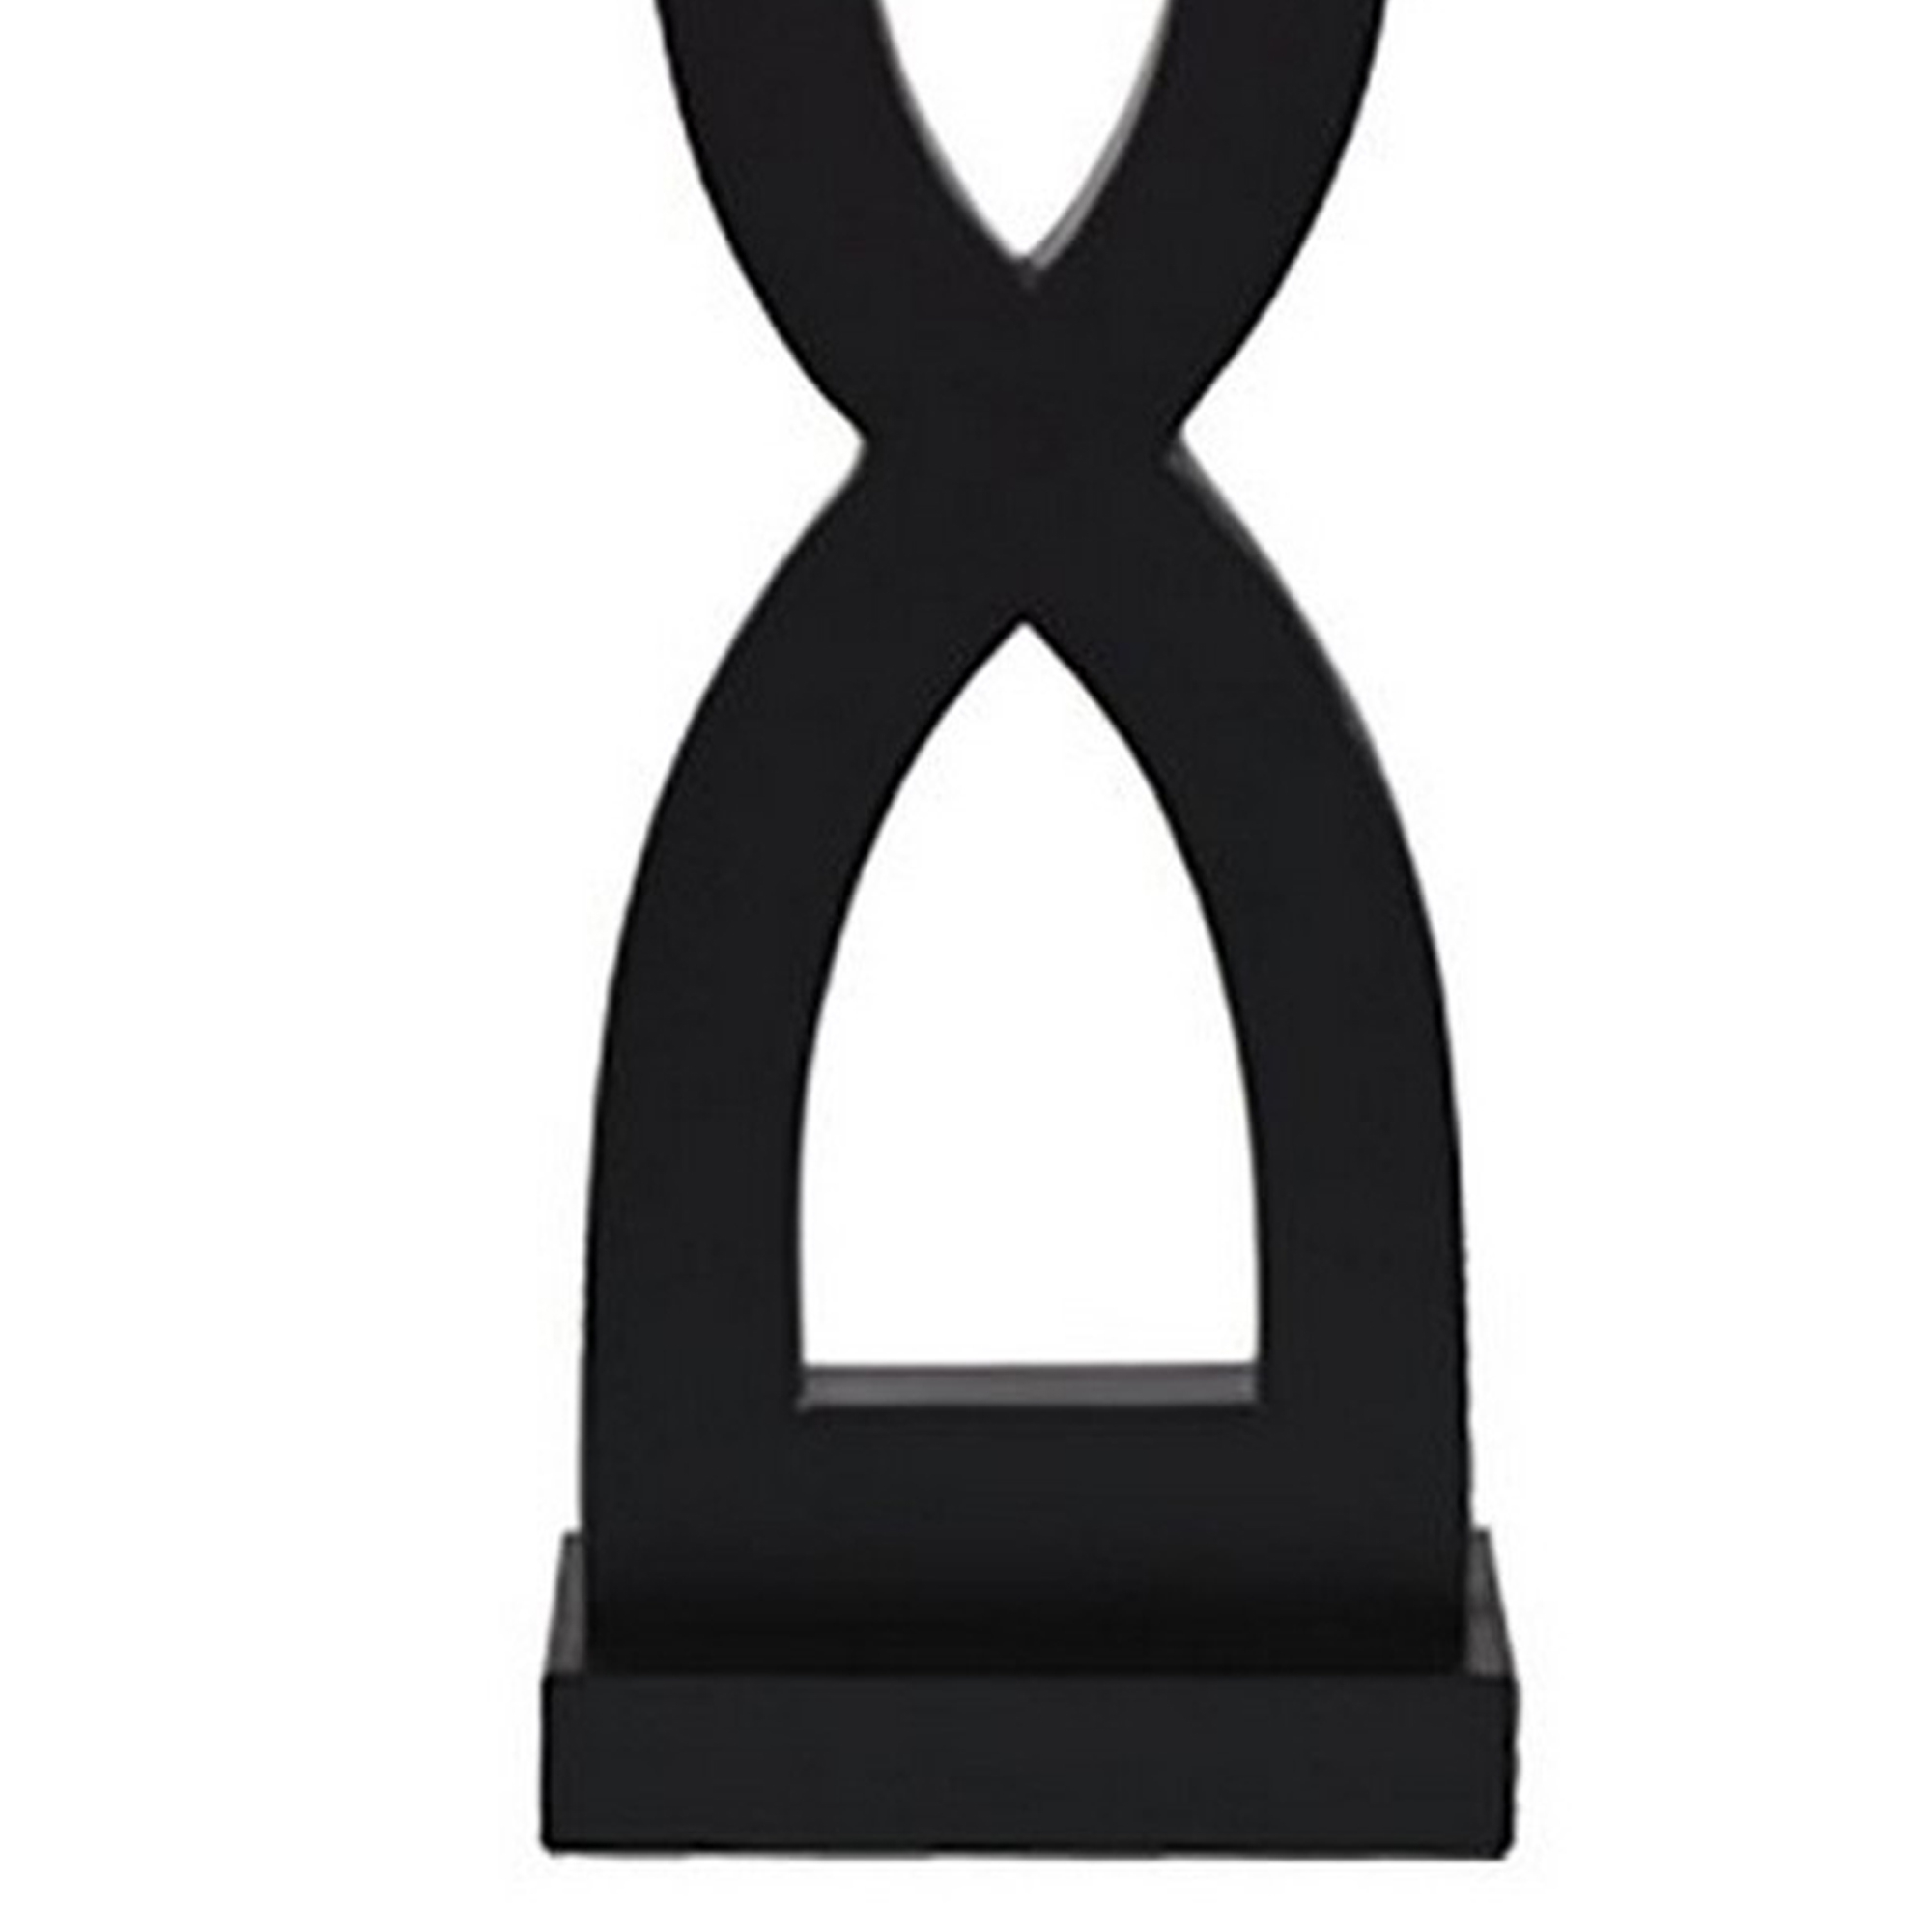 Resin Body Table Lamp With Hardback Shade, Set Of 2, Black And White- Saltoro Sherpi